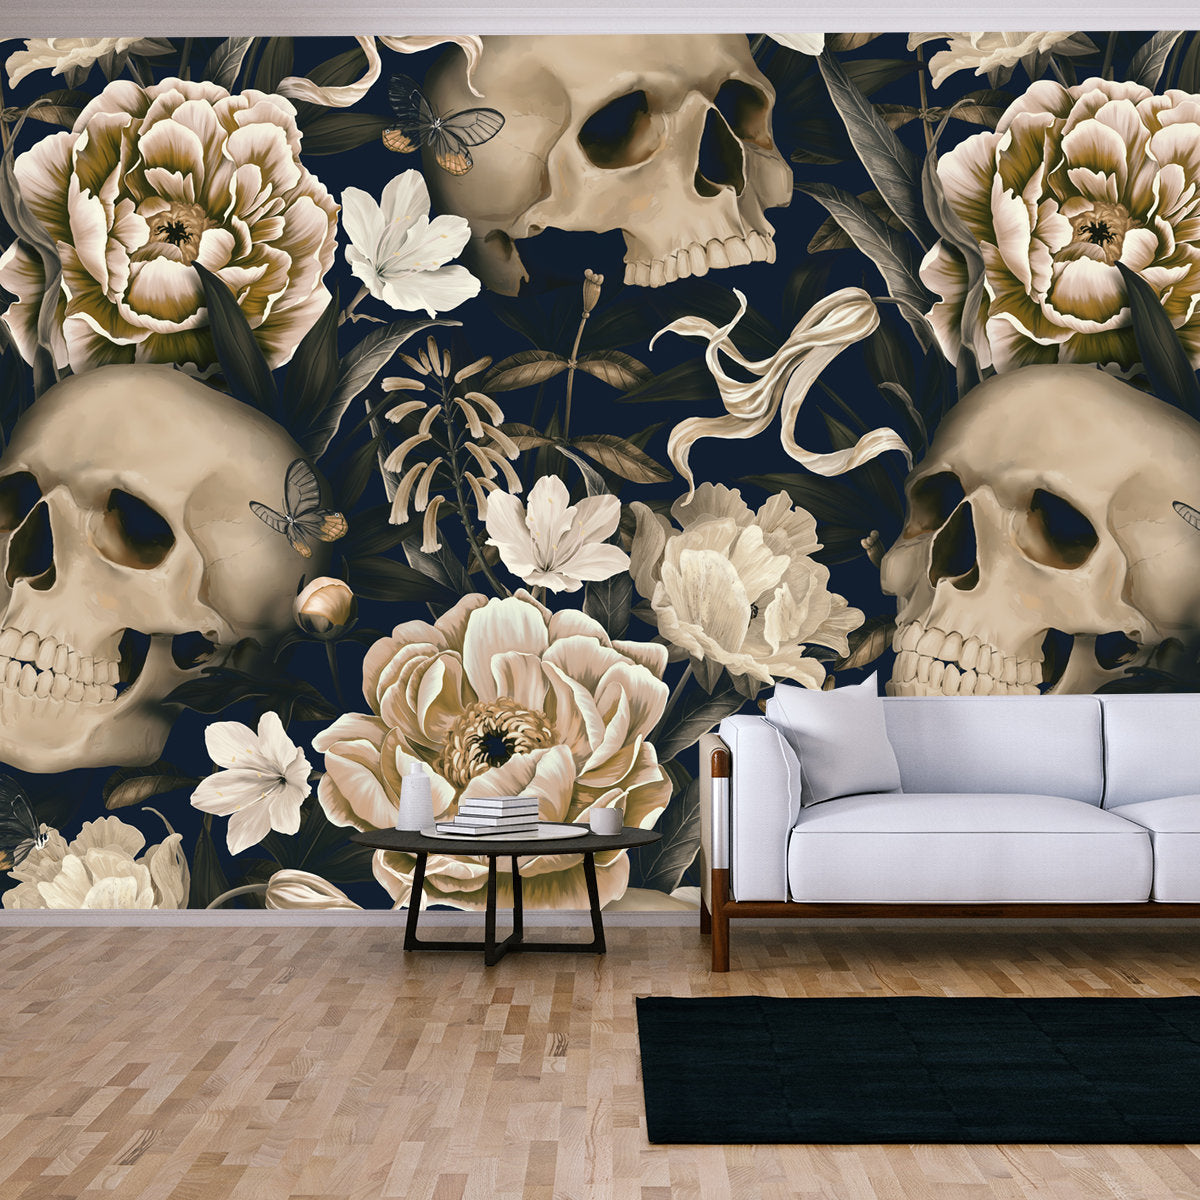 Vintage Floral Seamless Wallpaper with Skulls, Peonies, Butterflies. Dark Botanical Background Wallpaper Living Room Mural